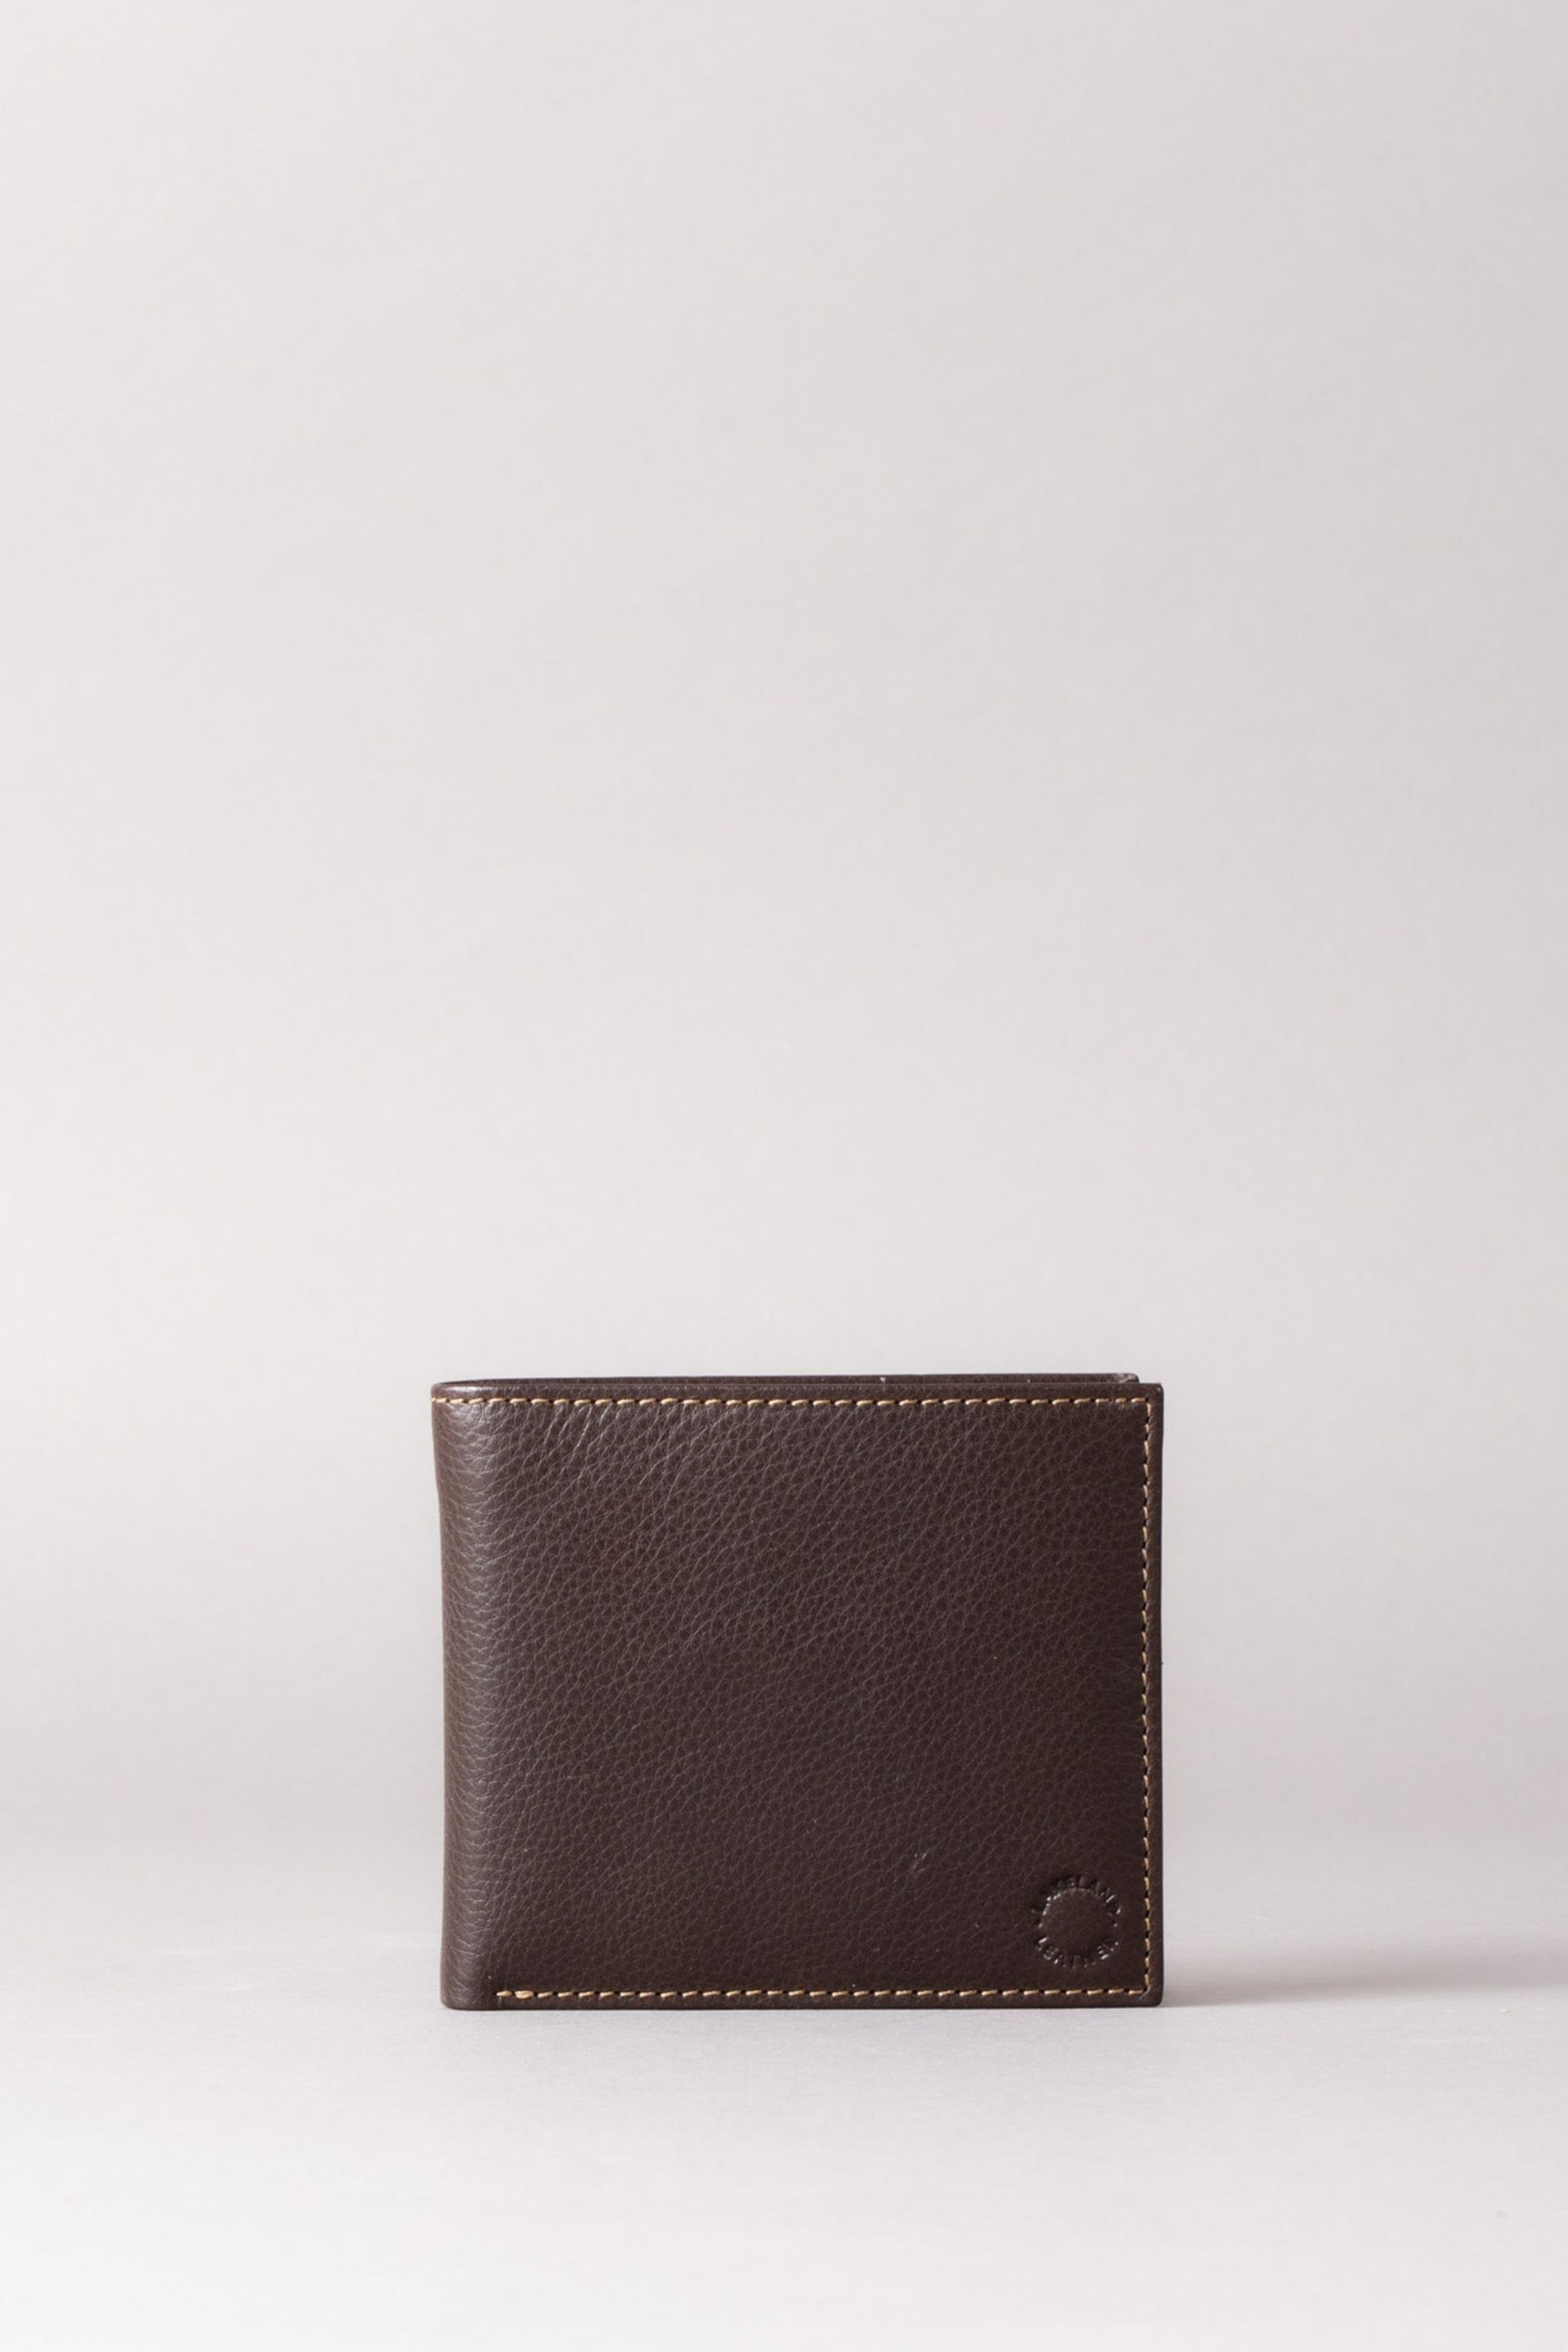 Lakeland Leather Brown Kelsick Leather Wallet - Image 2 of 7